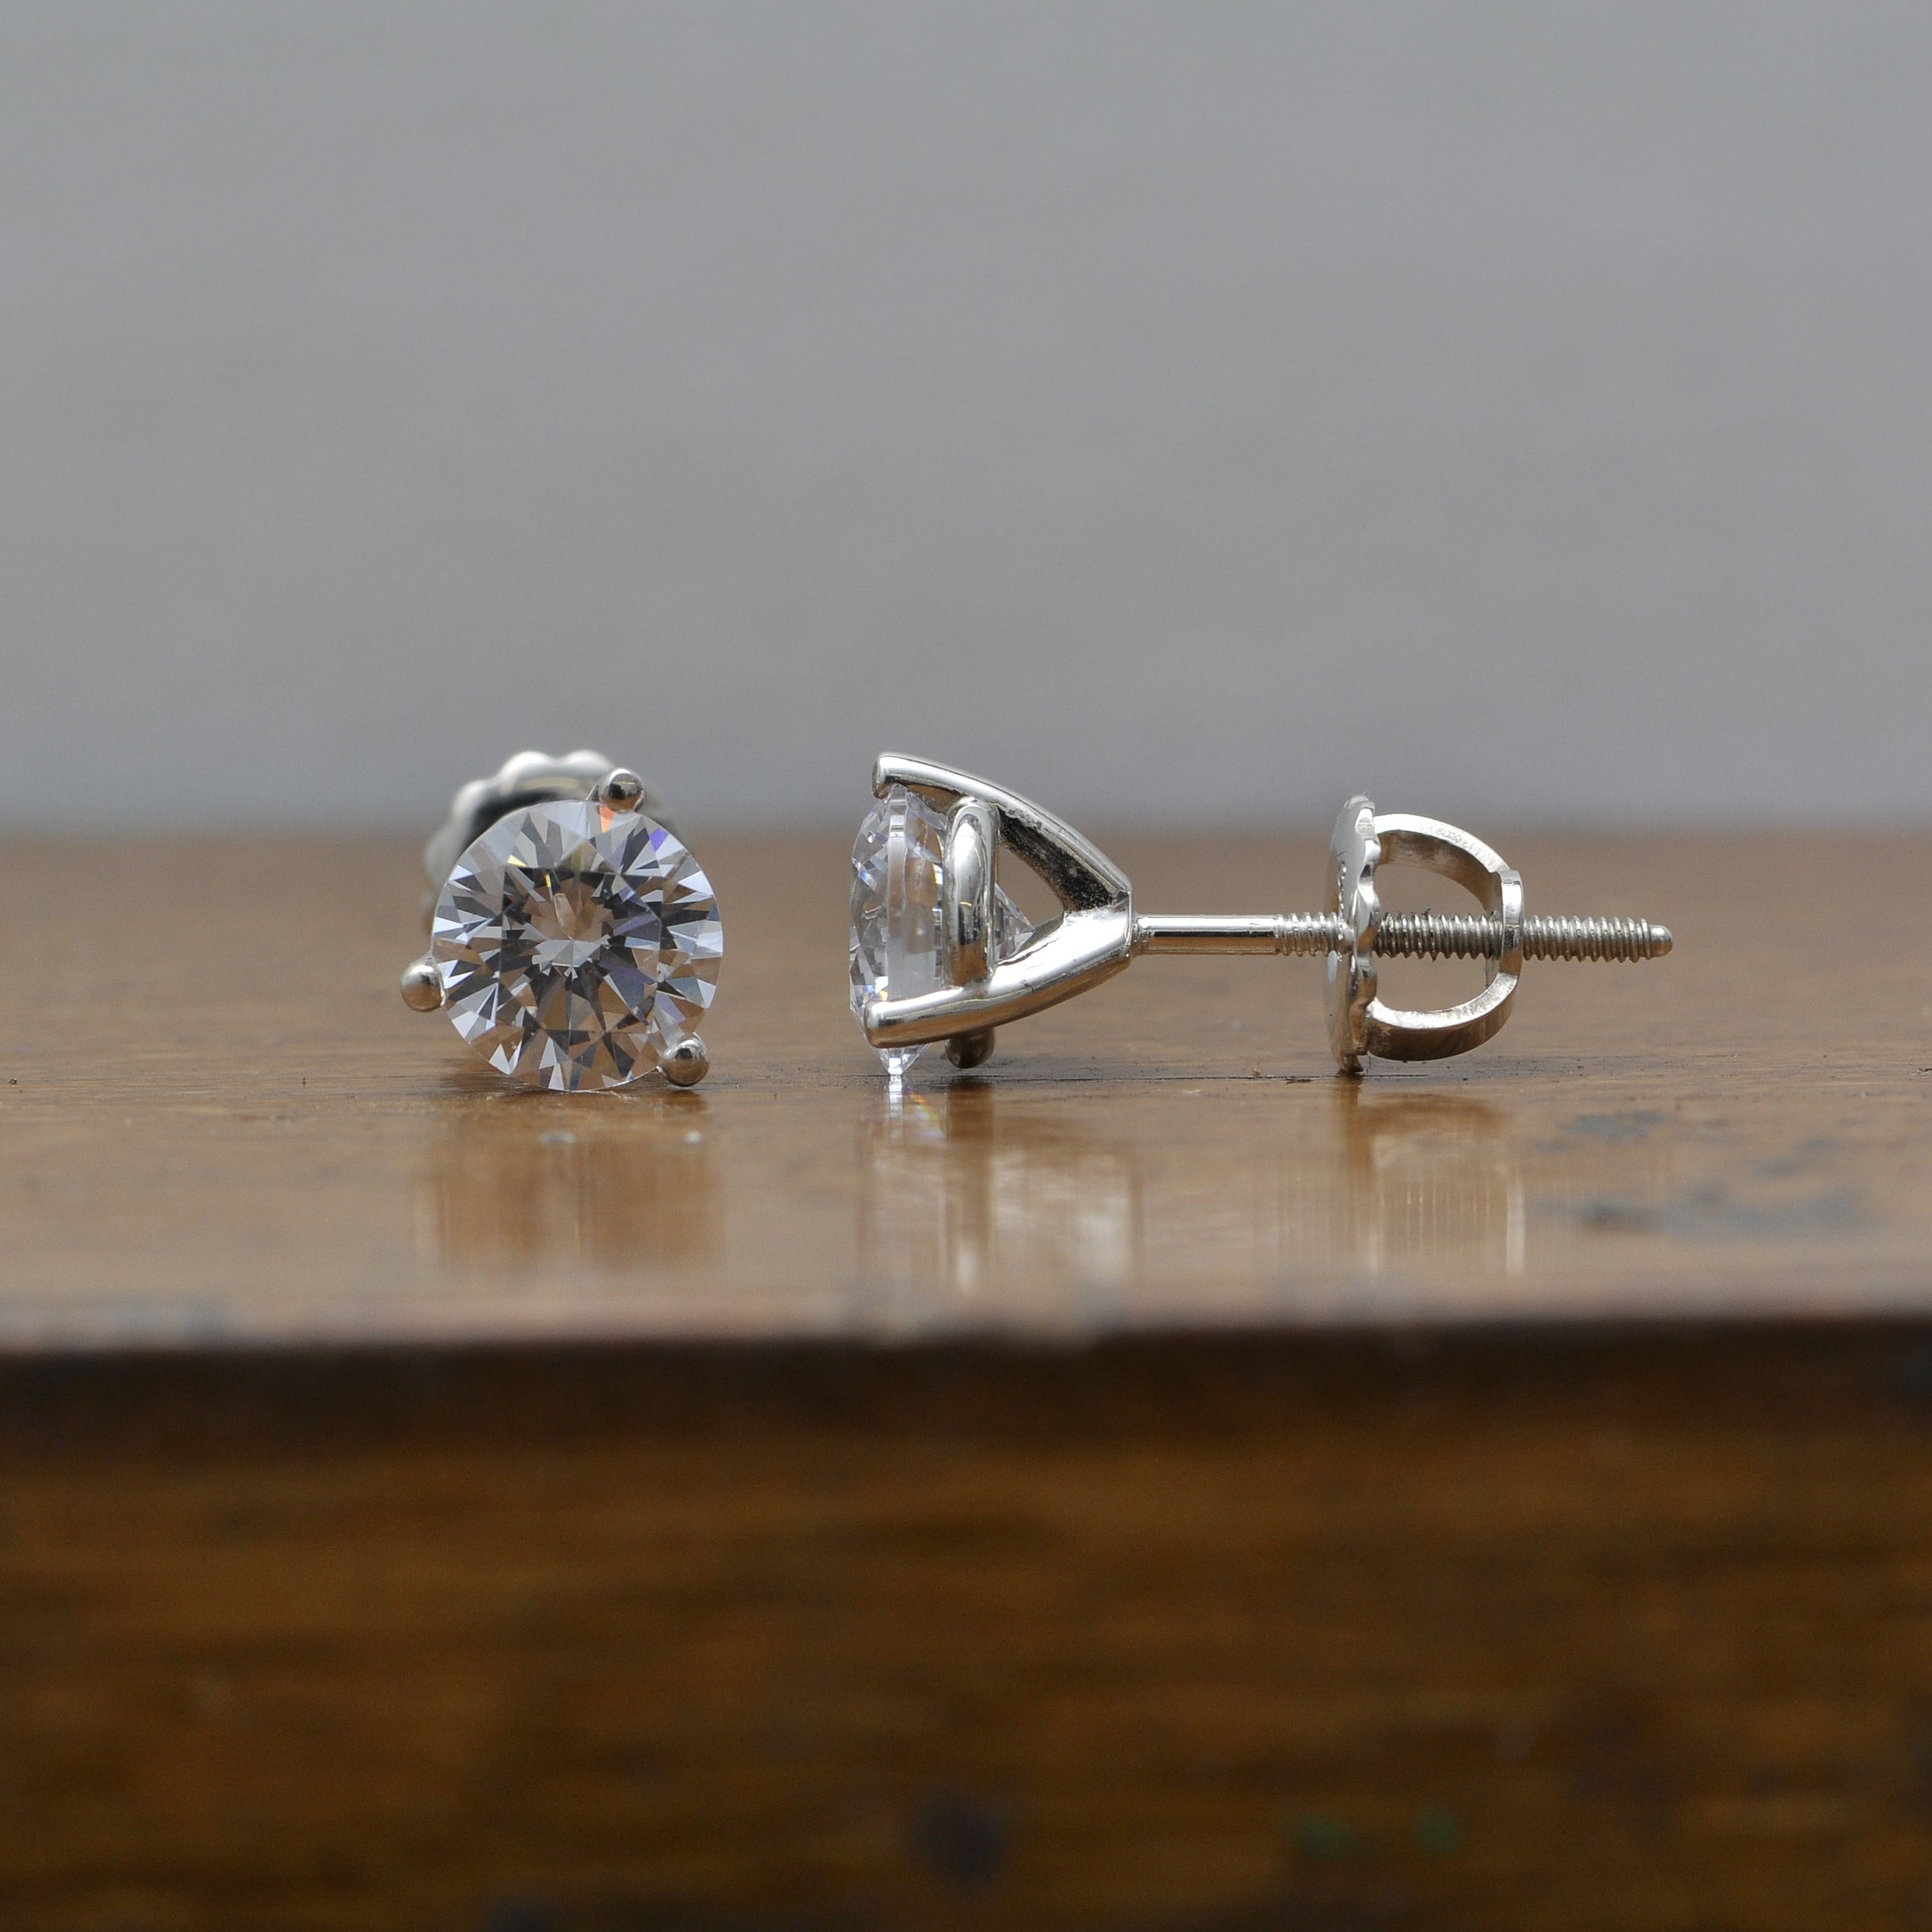 Cubic Zirconia Earrings- *Clearance* 1.5 Carat TGW 3 Prong Round CZ Stud Earring Set in Sterling Silver